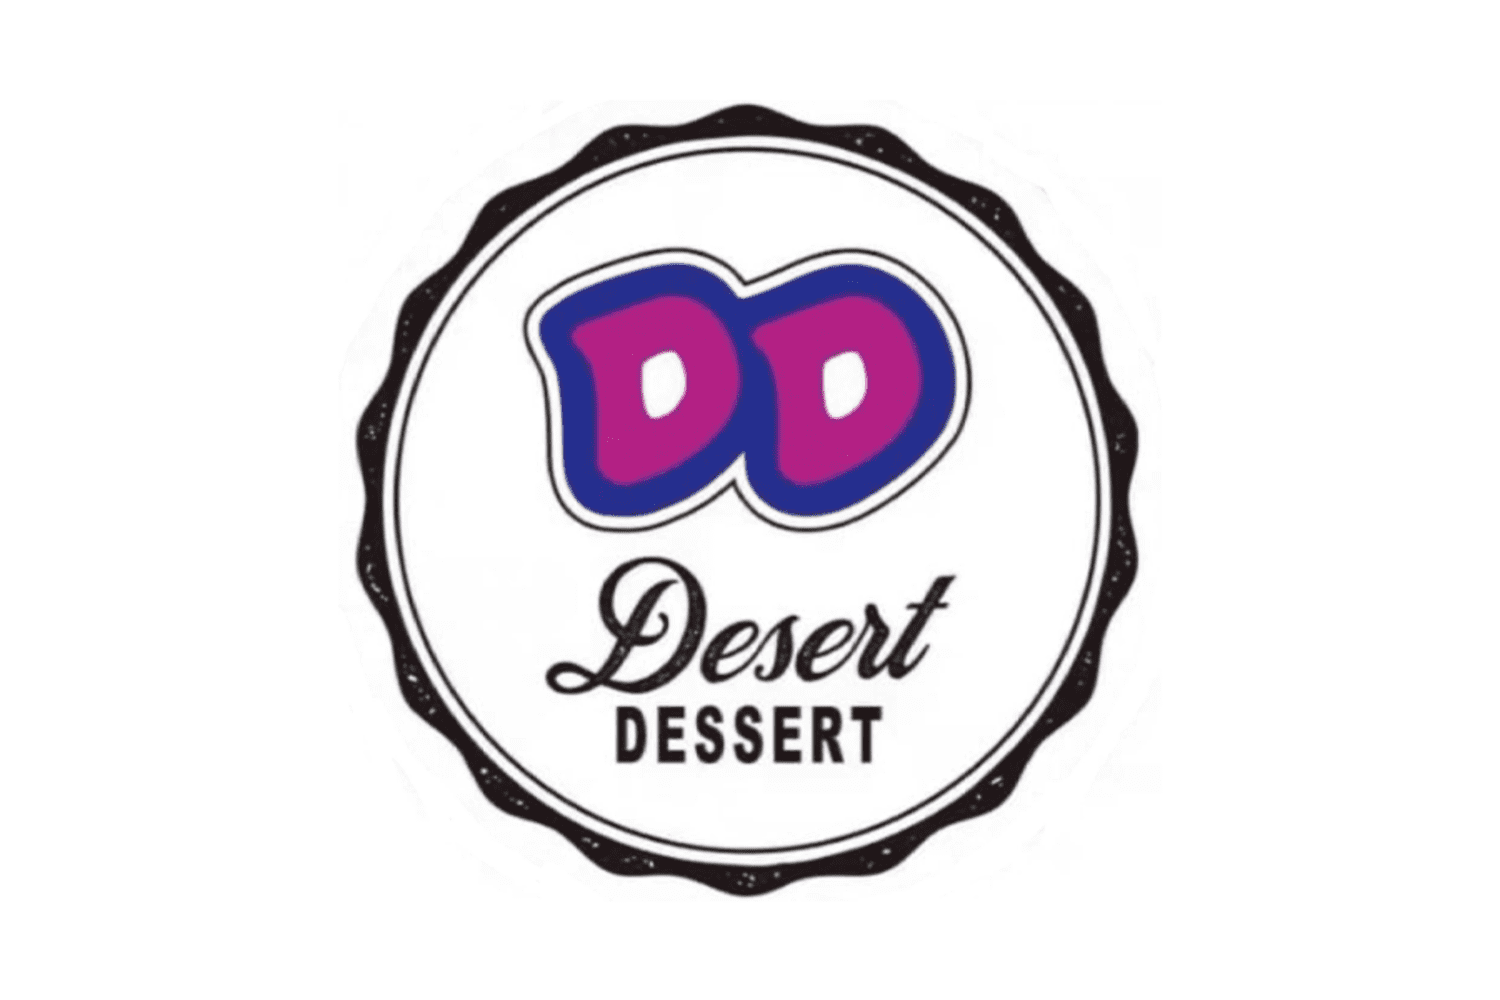 $10 Cash Voucher at Desert Dessert - Get Deals, Cashback and Rewards with ShopBack GO